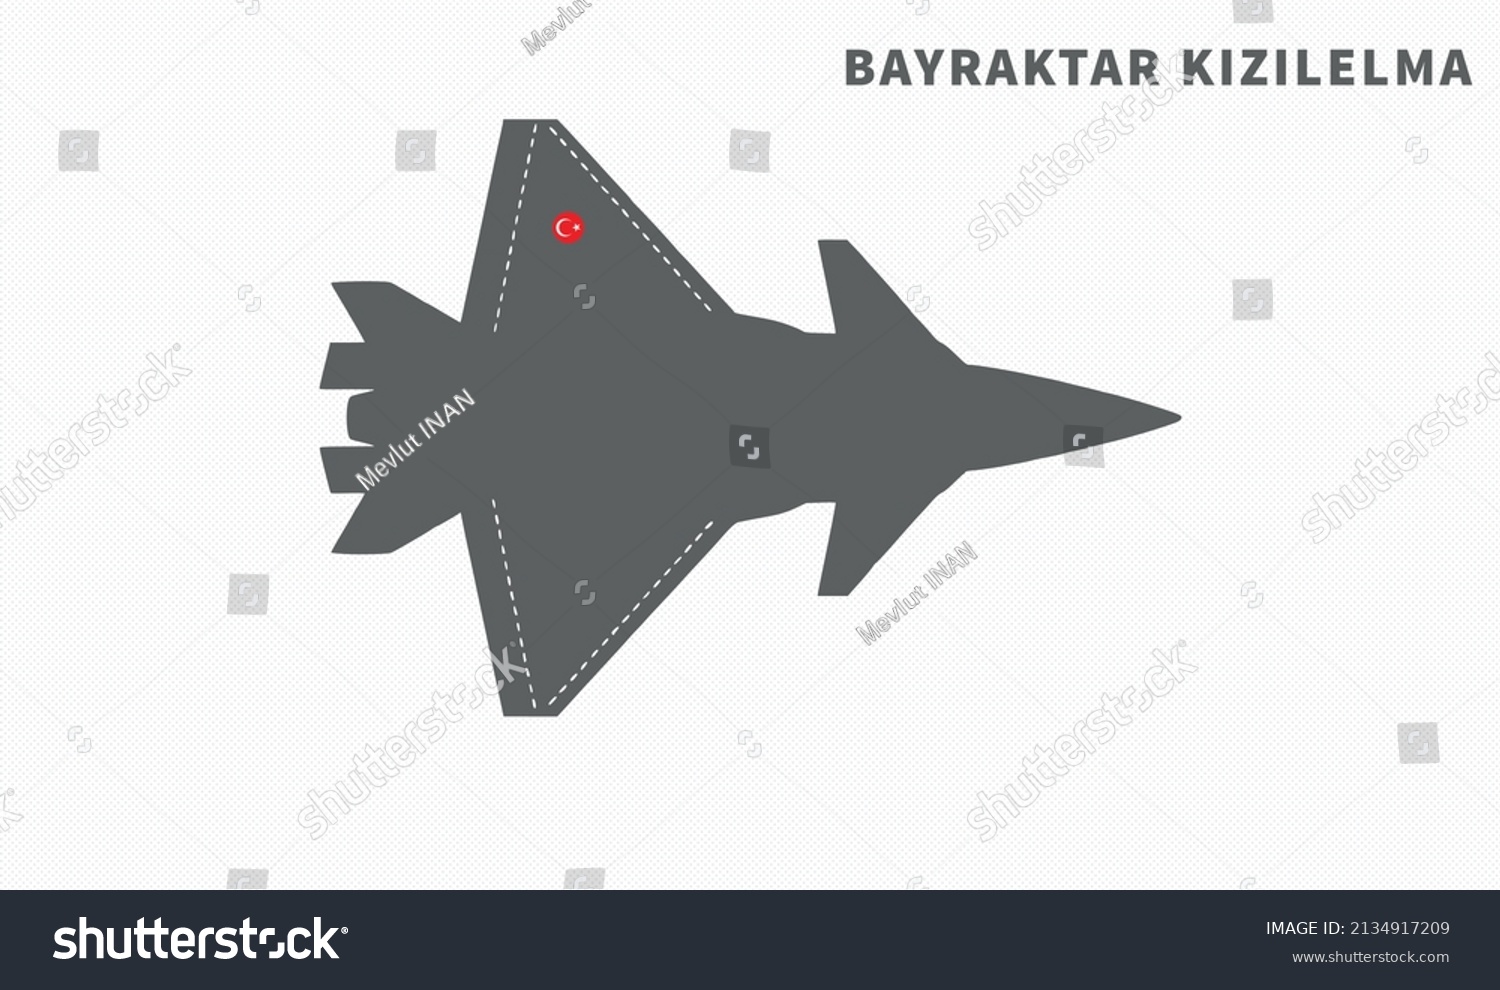 SVG of Bayraktar Kızılelma Combatant Unmanned Aircraft System (CUAS).  svg